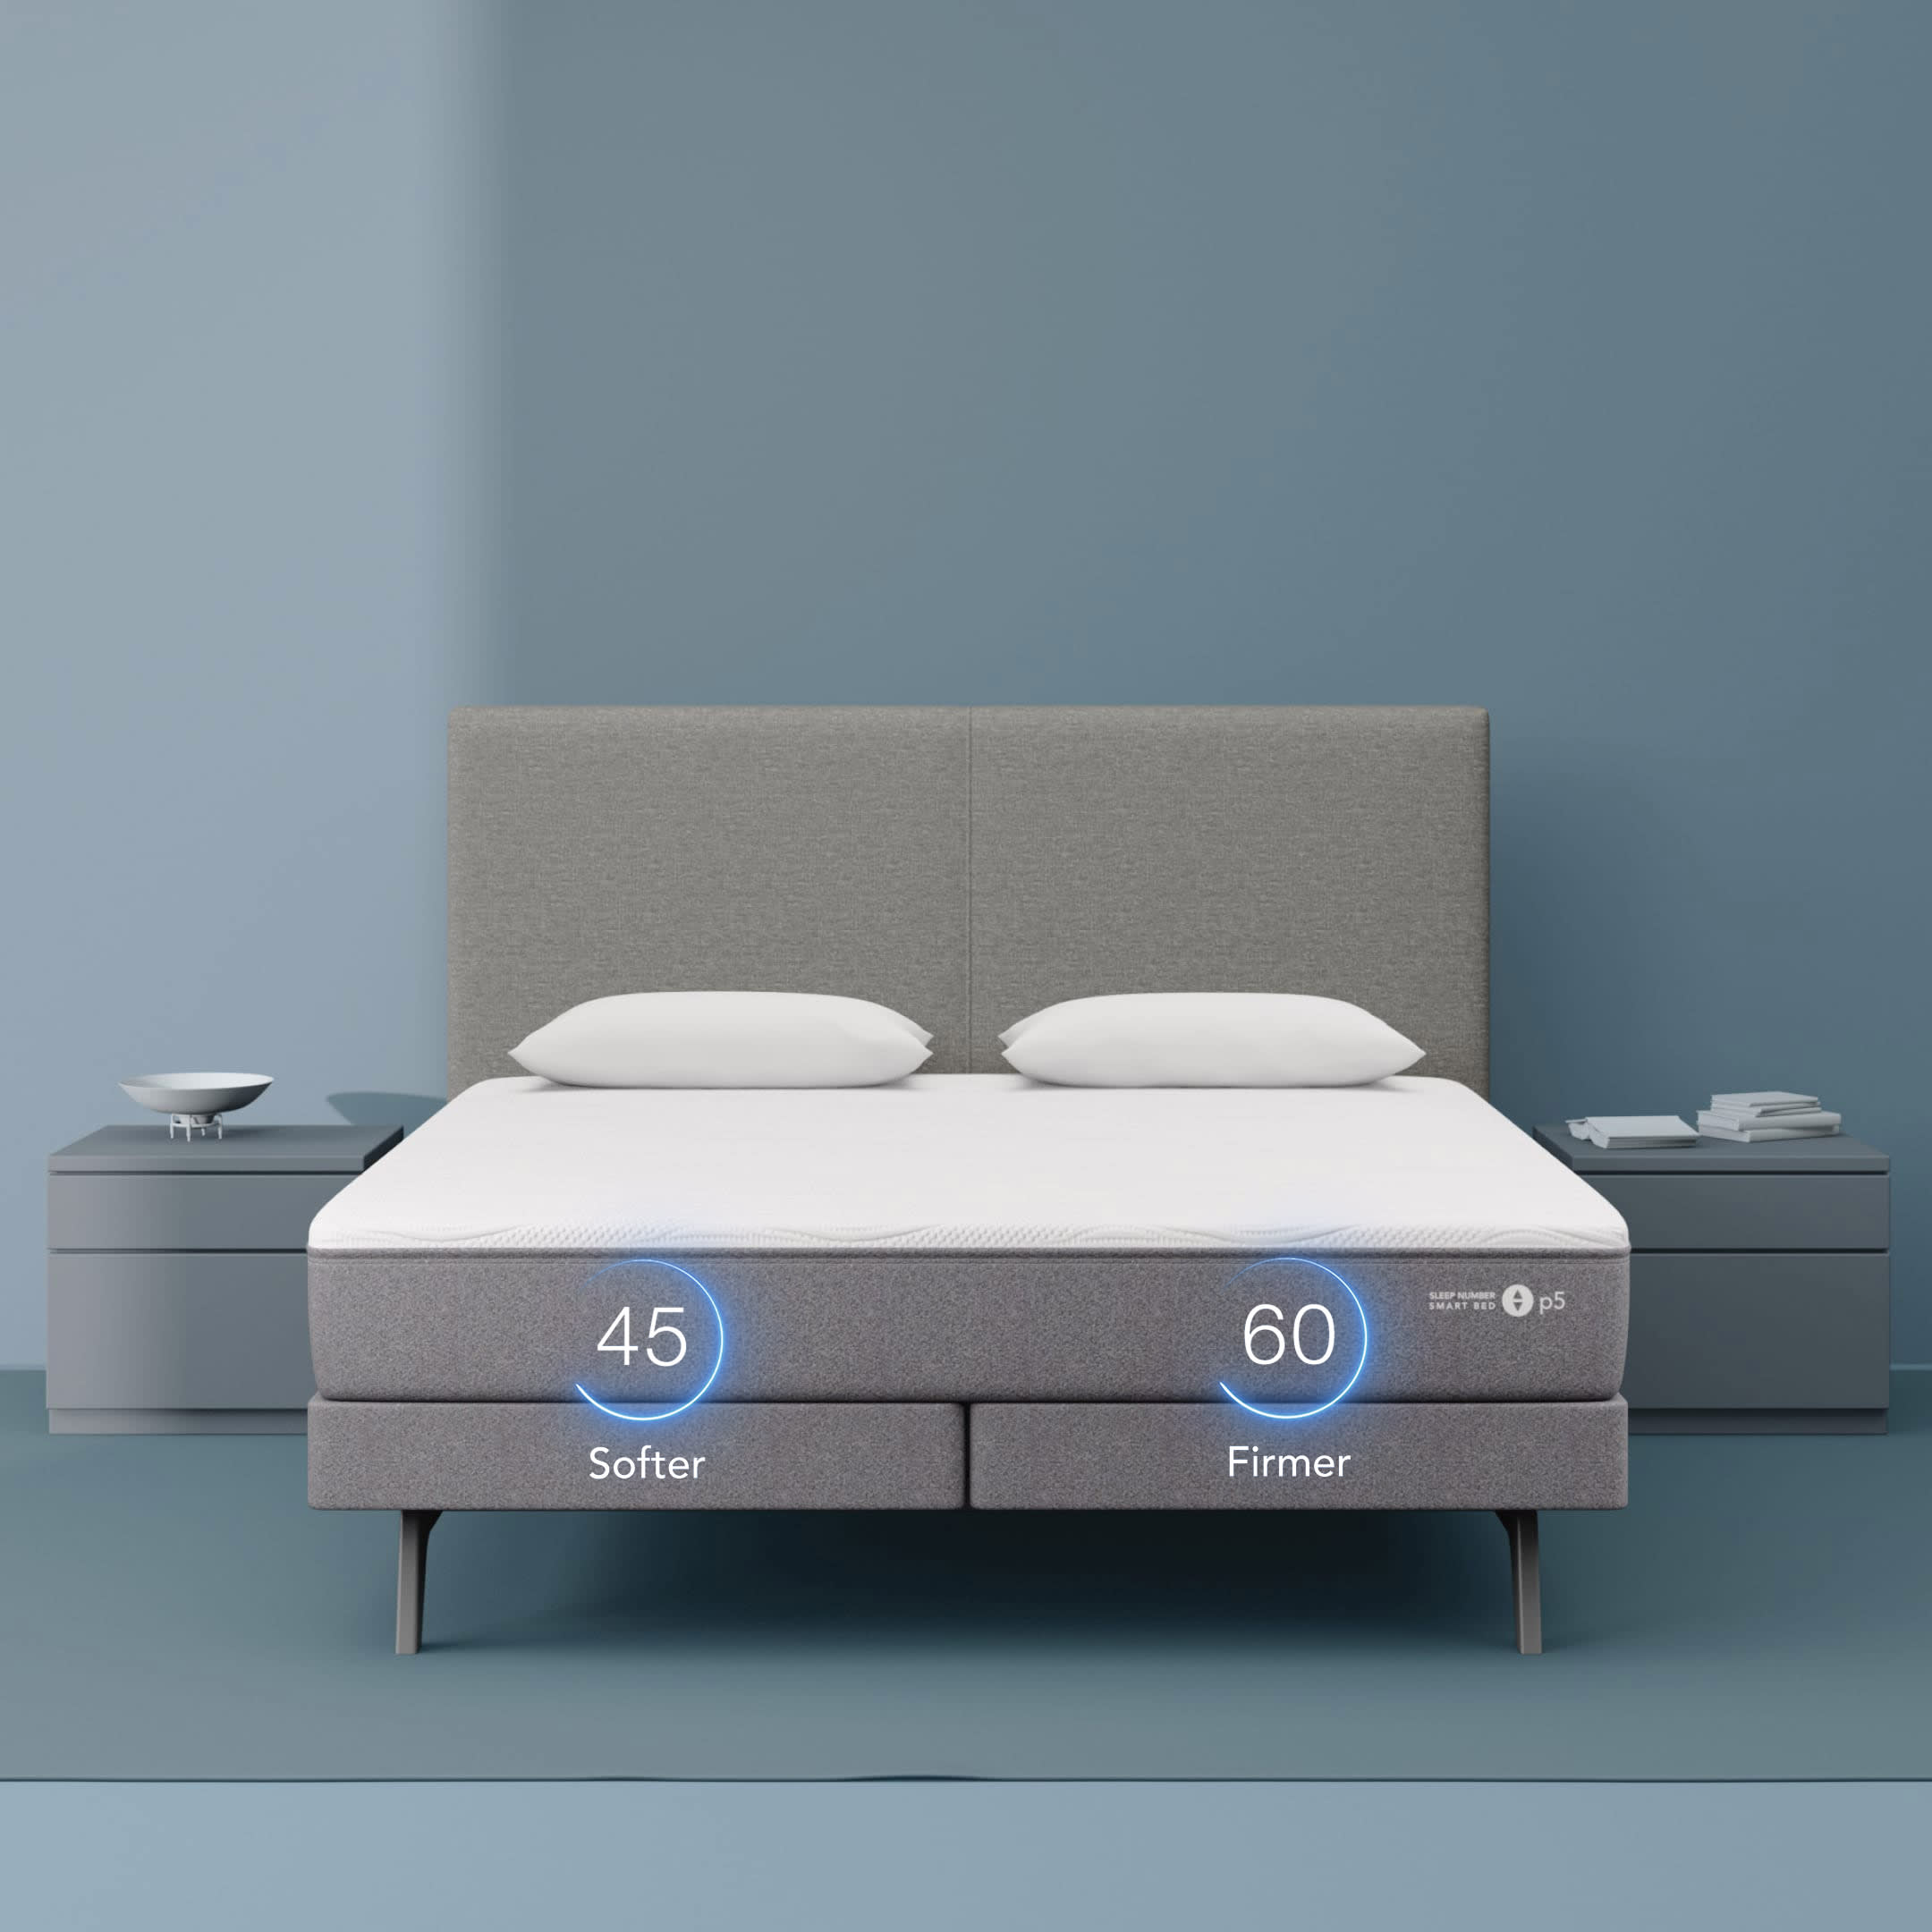 FlexFit™ 1 Smart Base - Sleep Number